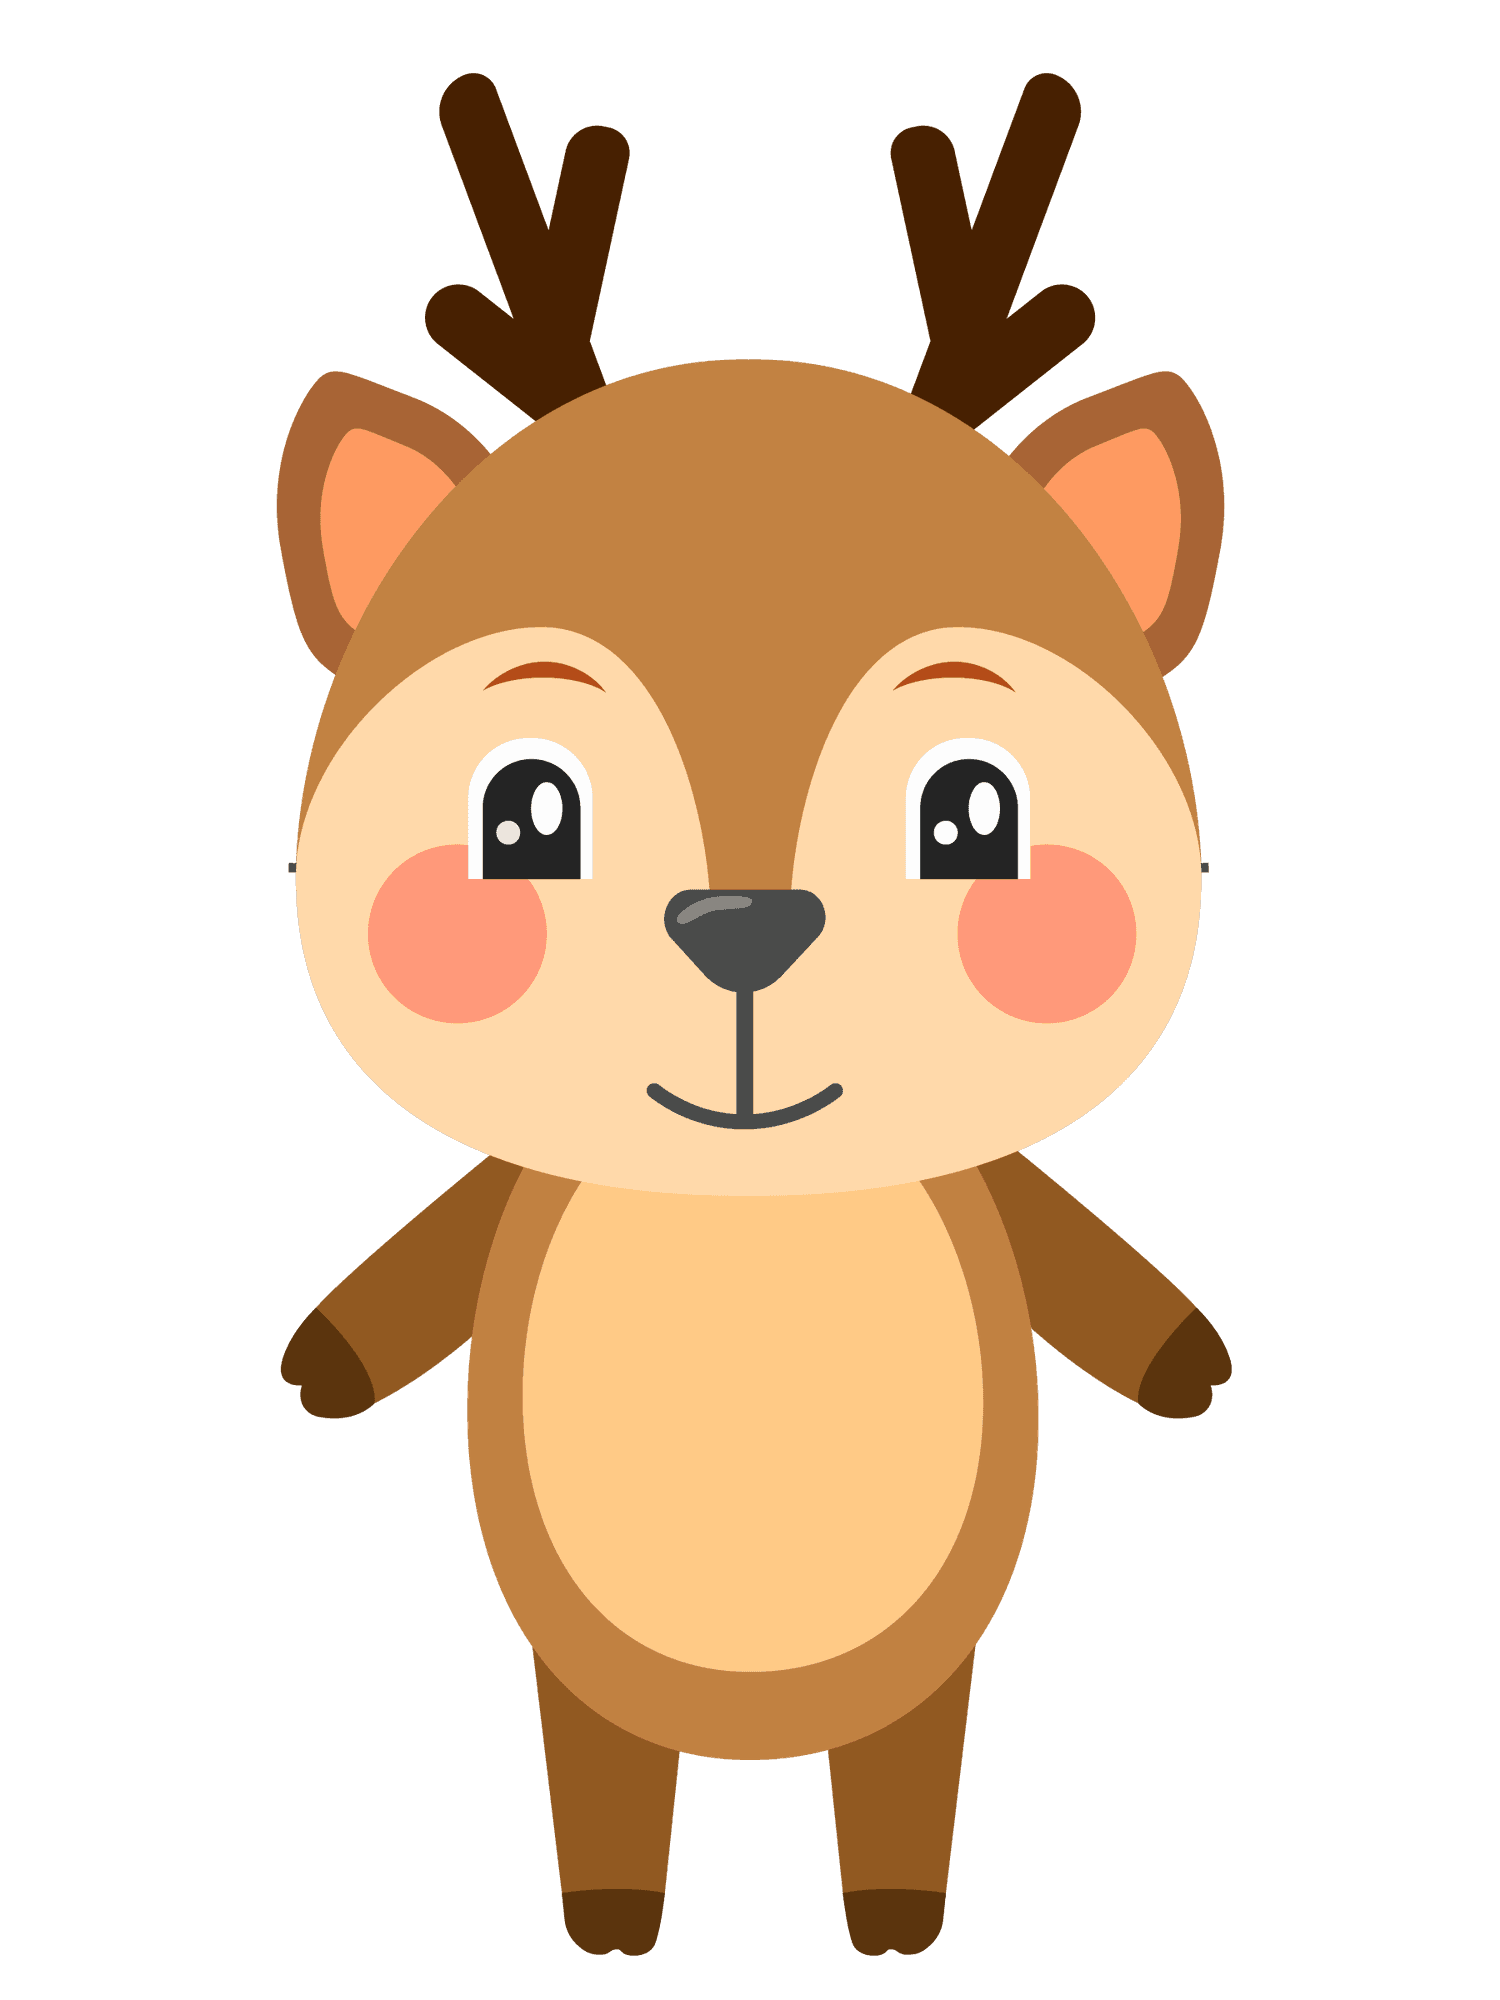 cute cartoon deer illustration for kids design